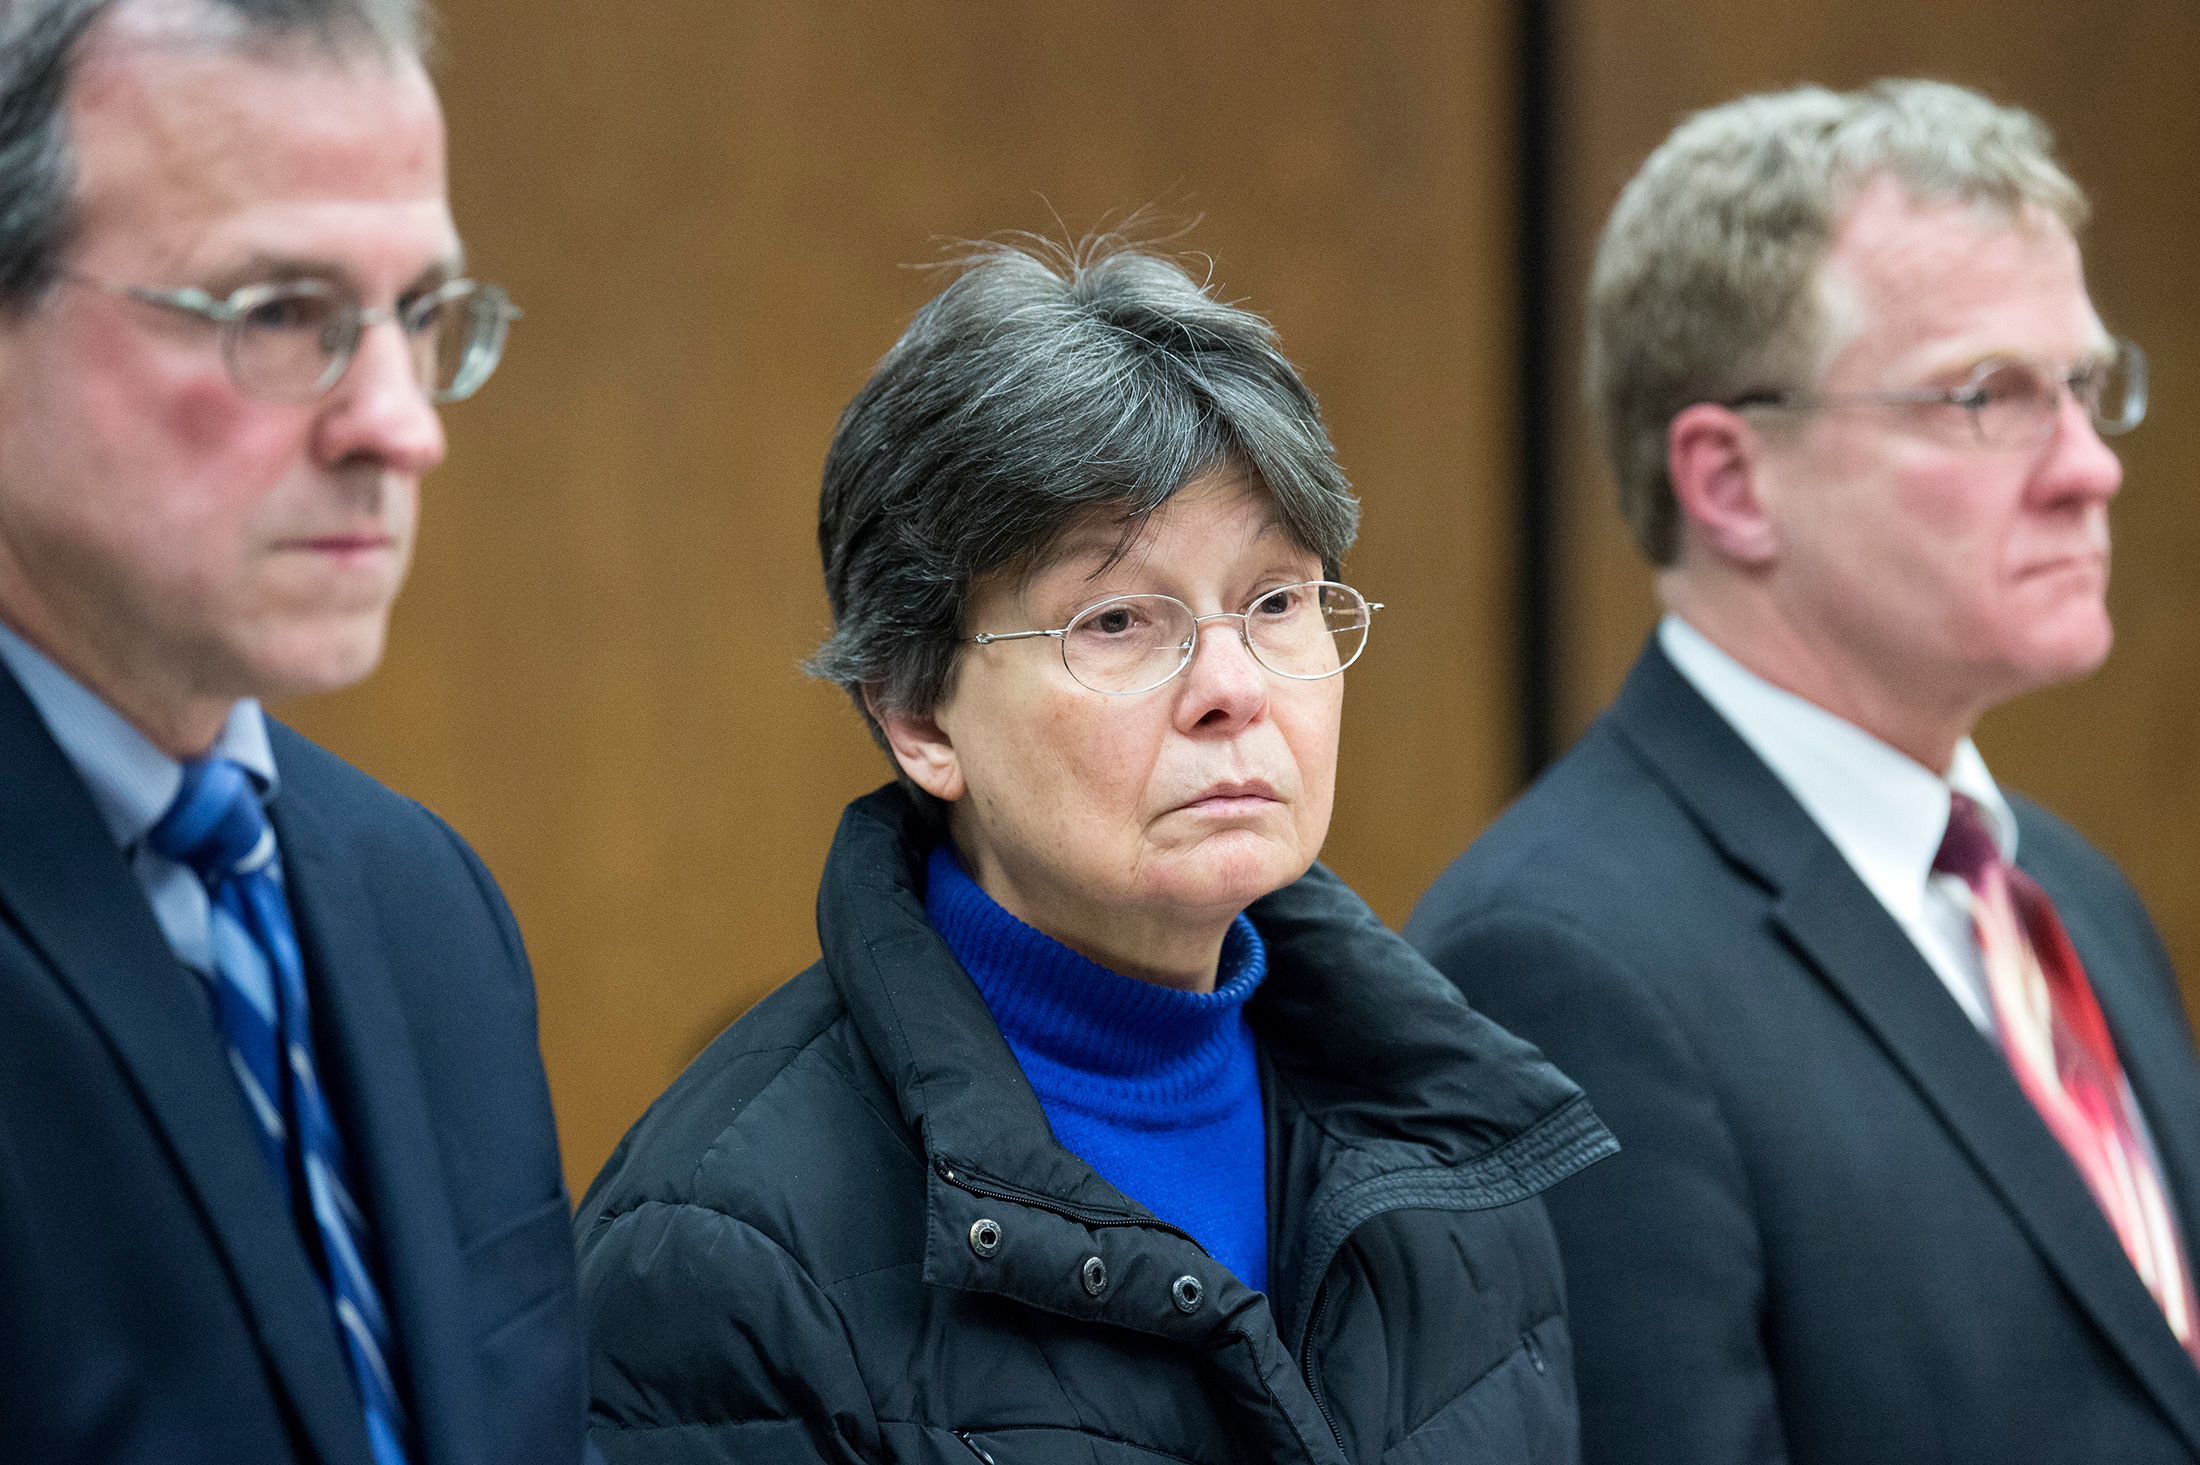 Linda Kosuda-Bigazzi, 70, center, appears at Bristol Superior Court, accused of murdering her husband, Dr. Pierluigi Bigazzi, in Bristol, Connecticut., on Feb. 13, 2018.